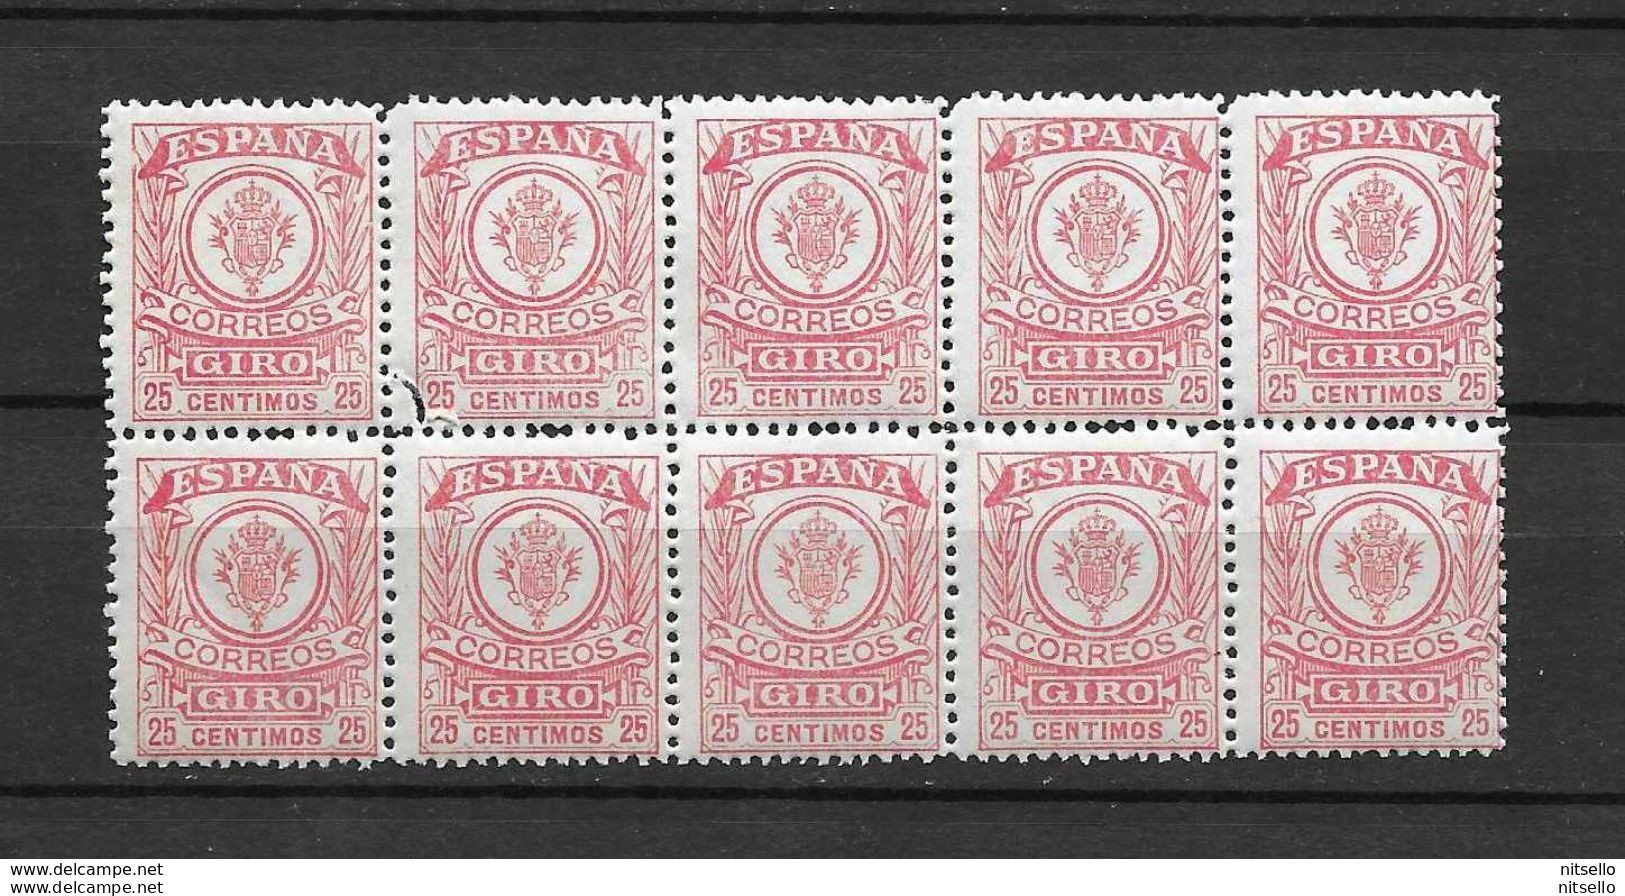 LOTE 1891 E  ///  (C025) ESPAÑA GIRO  EDIFIL Nº 3  BLOQ DE 10  **MNH  *** RARO **** - Revenue Stamps